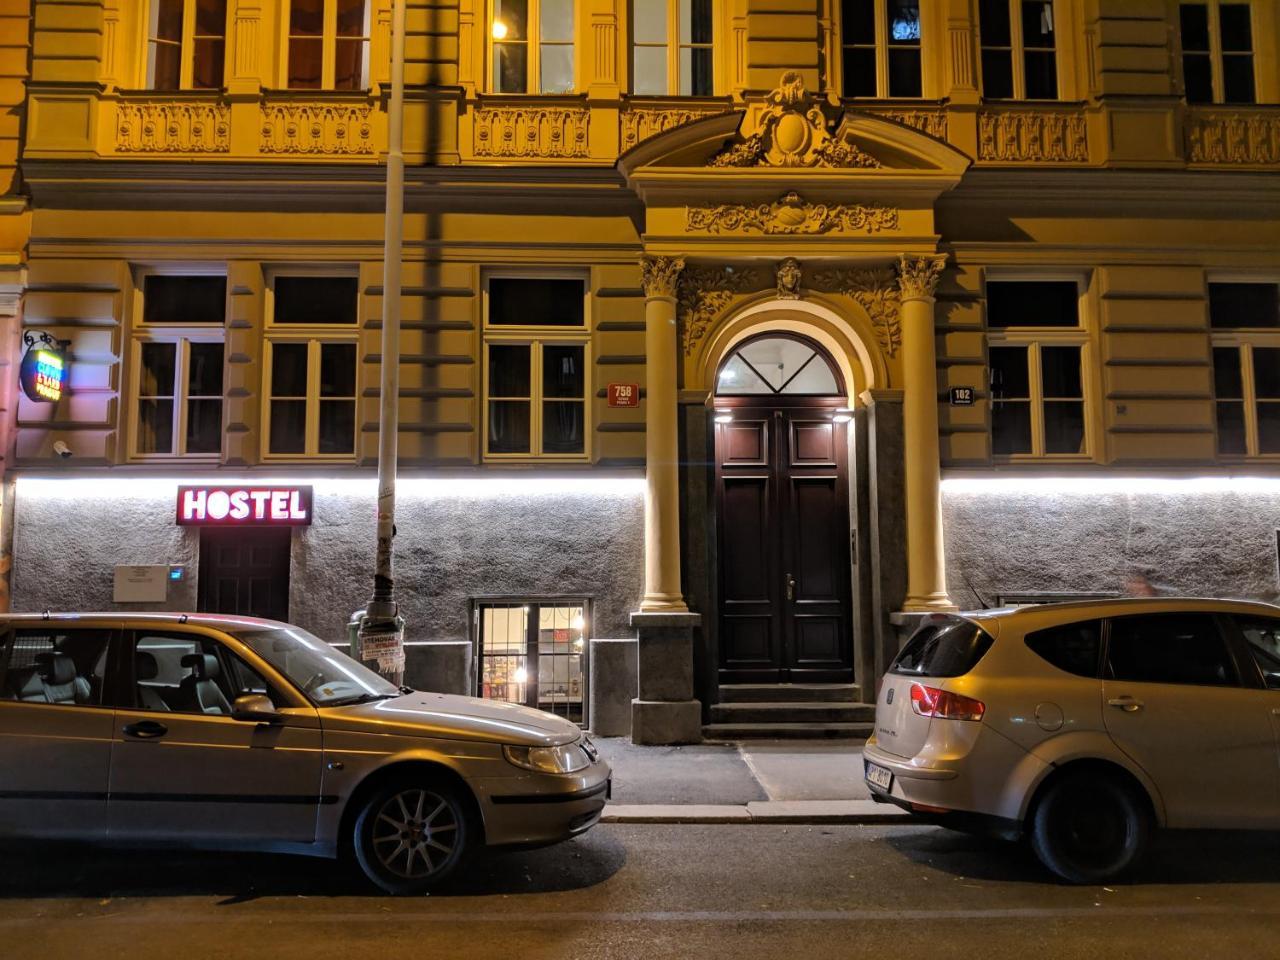 Clown And Bard Hostel Praga Exterior foto